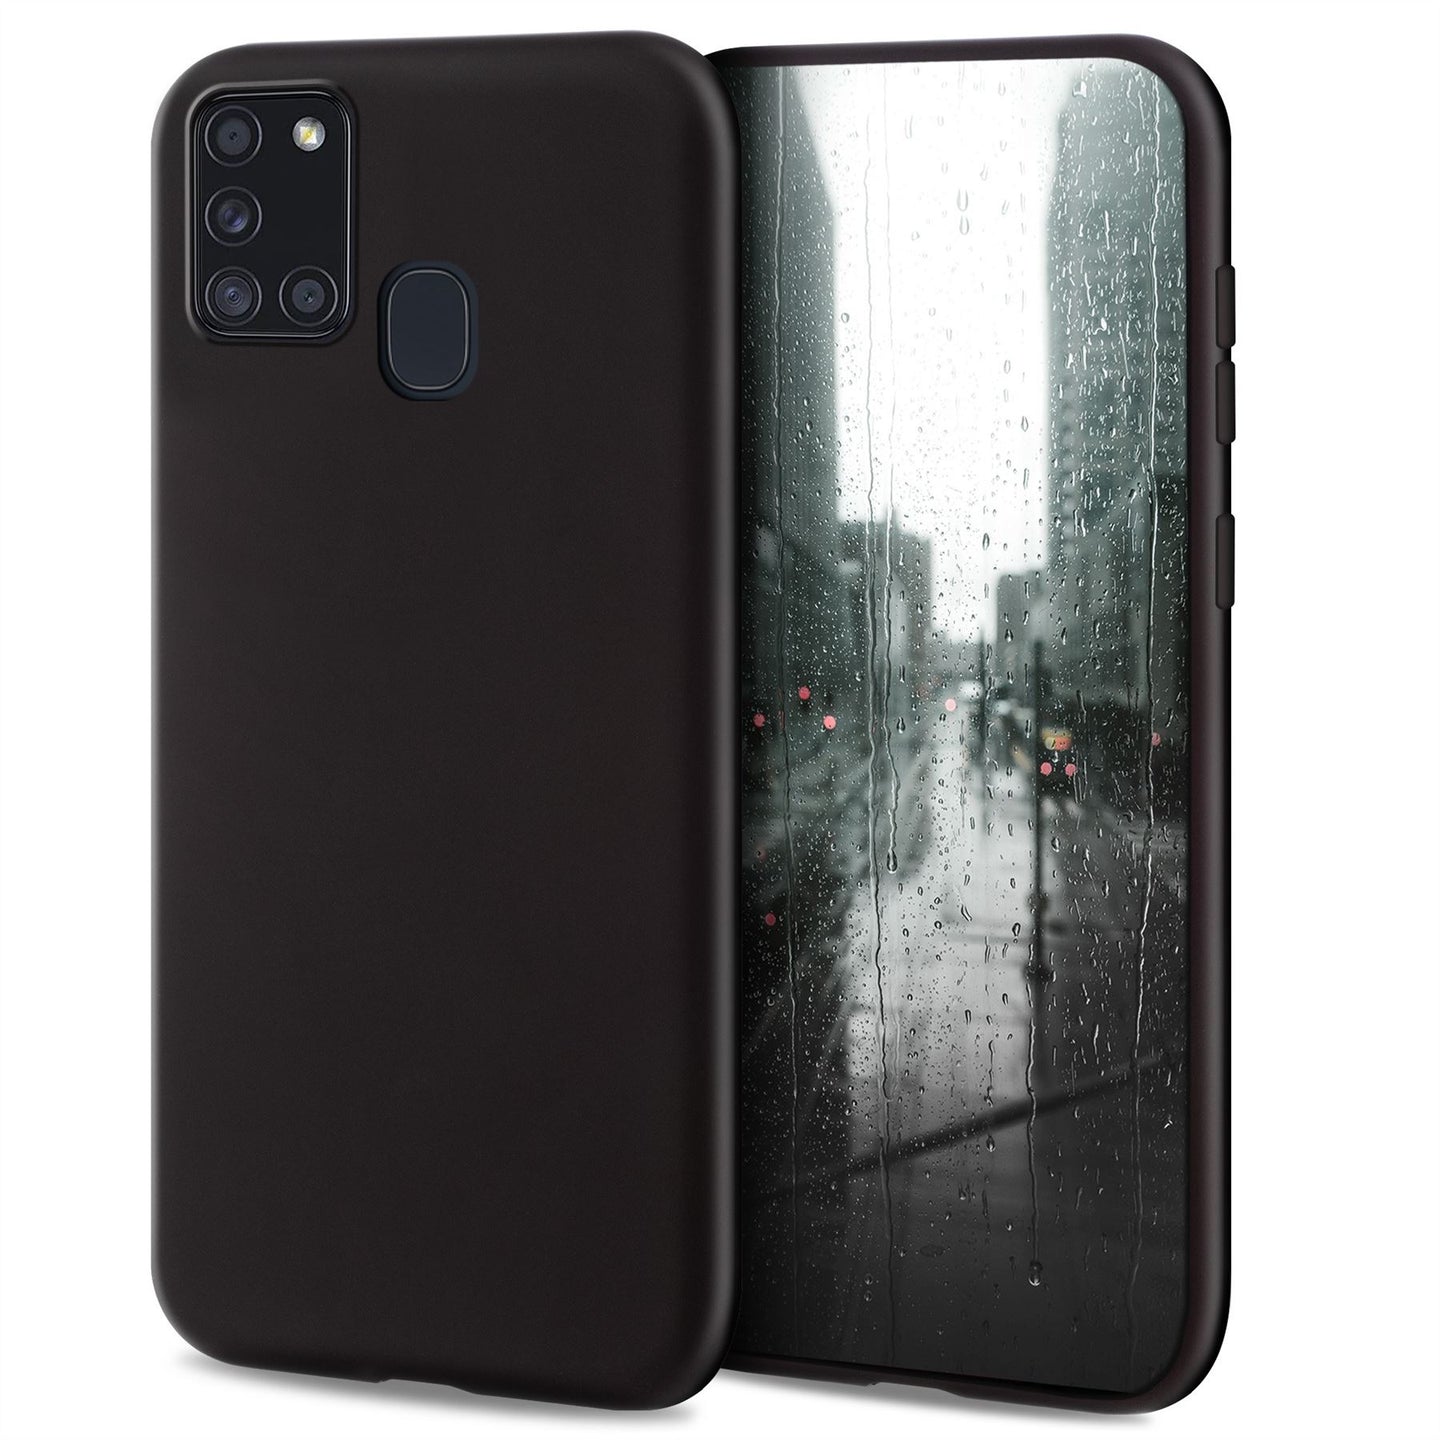 Moozy Minimalist Series Silicone Case for Samsung A21s, Black - Matte Finish Slim Soft TPU Cover